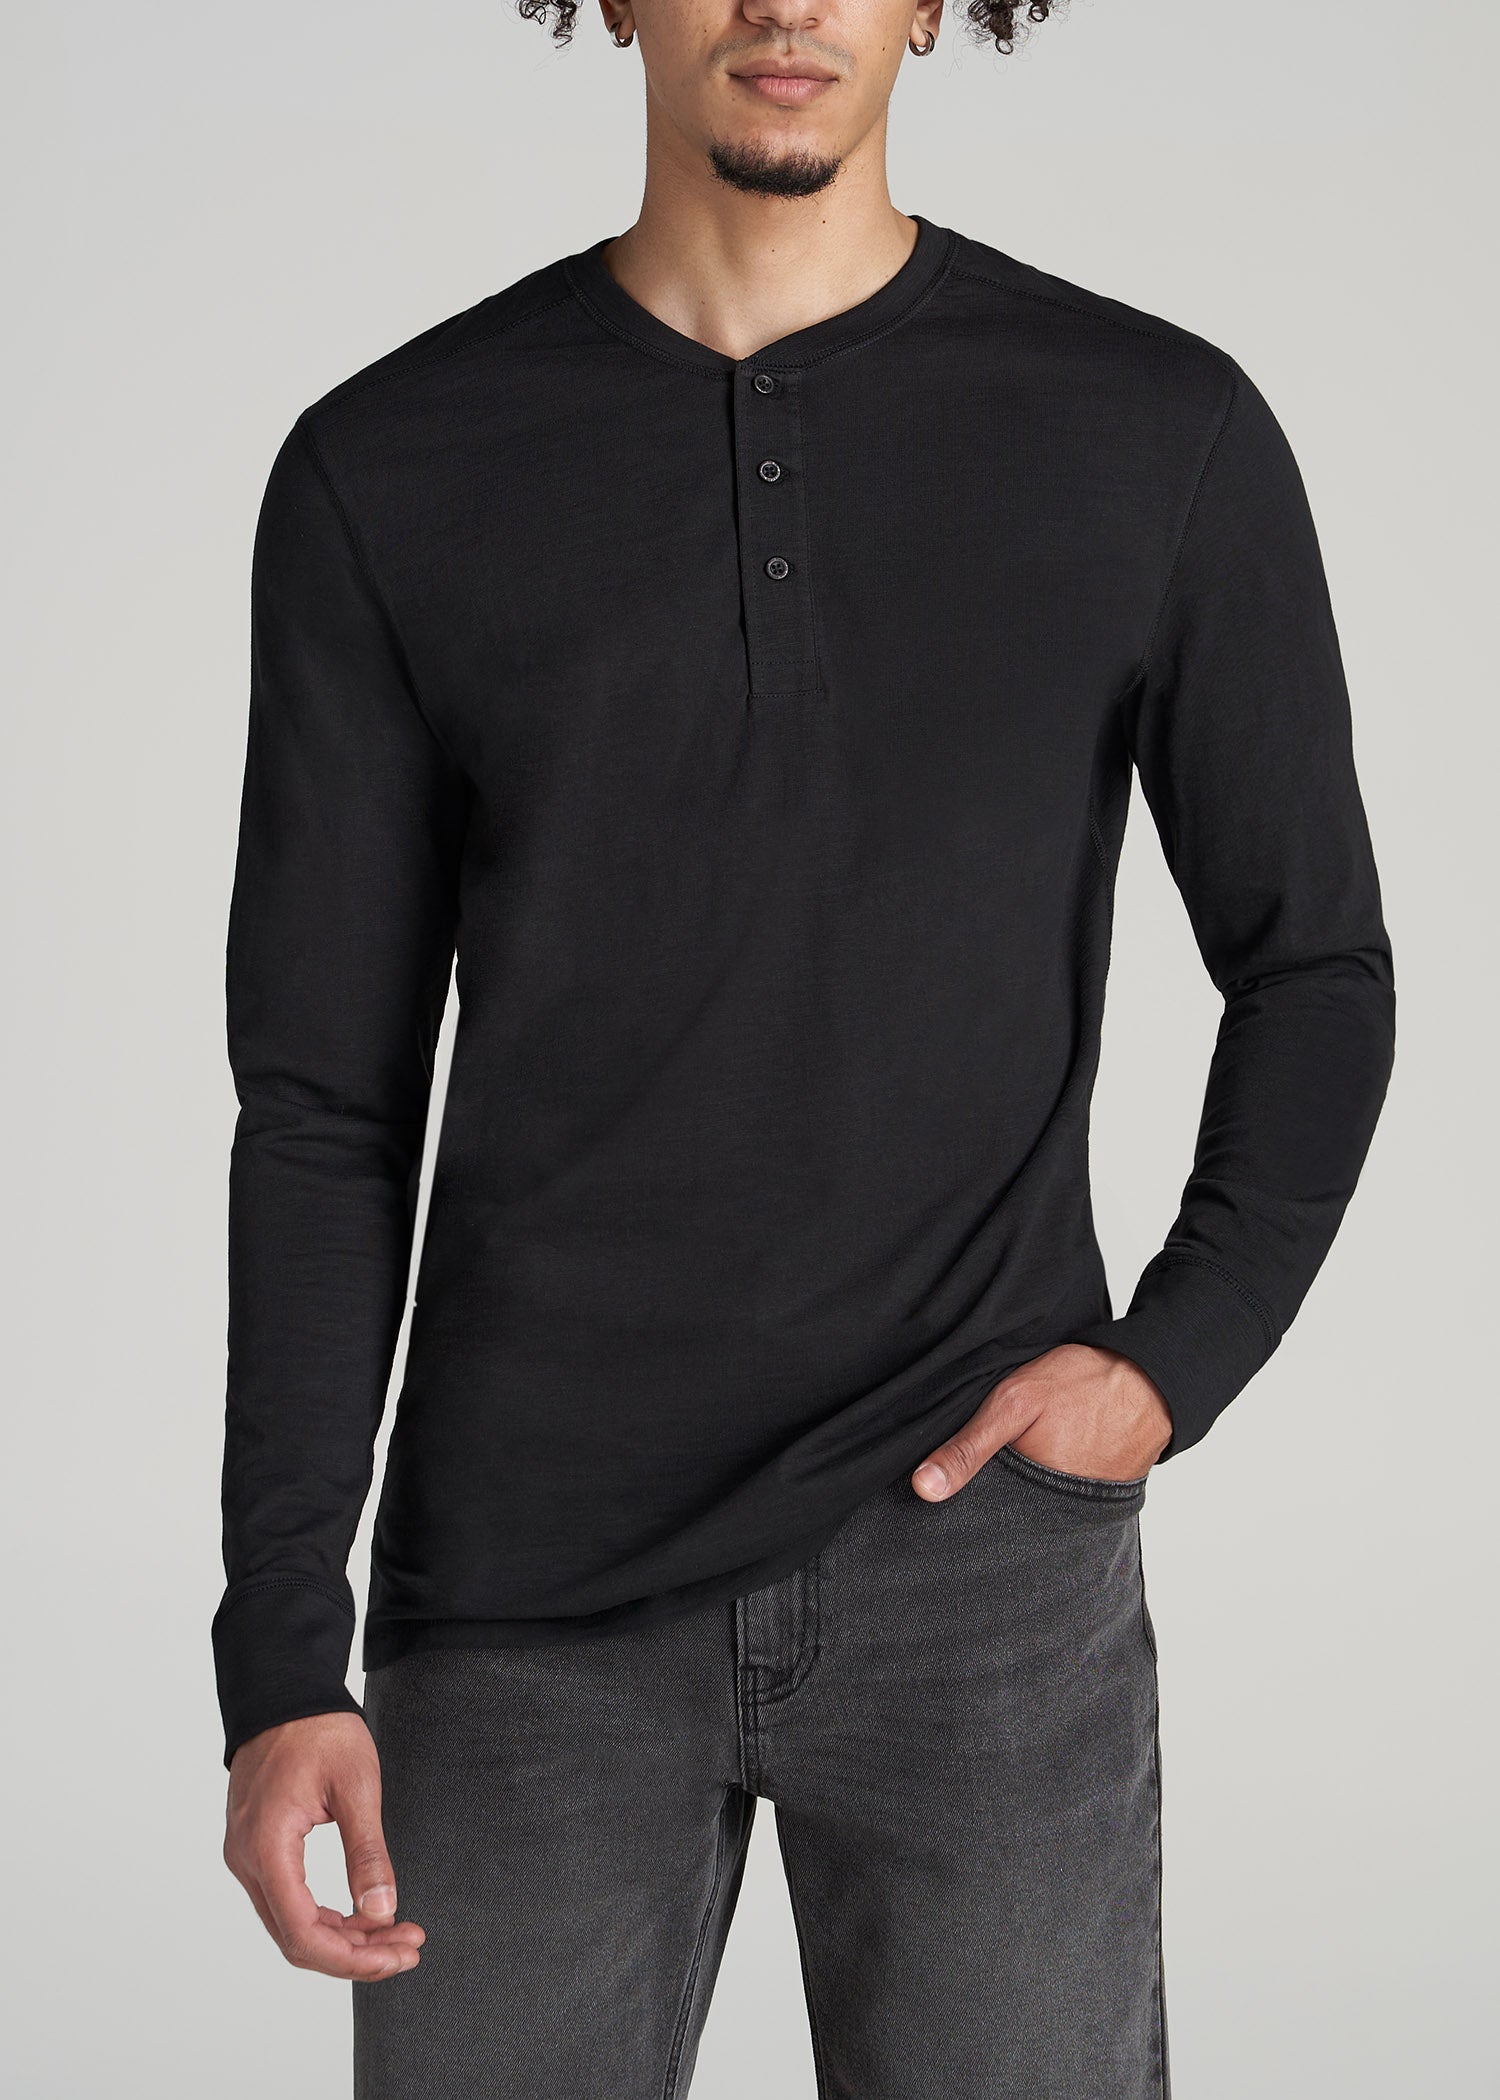 Men's Long Sleeve Shirt, Black